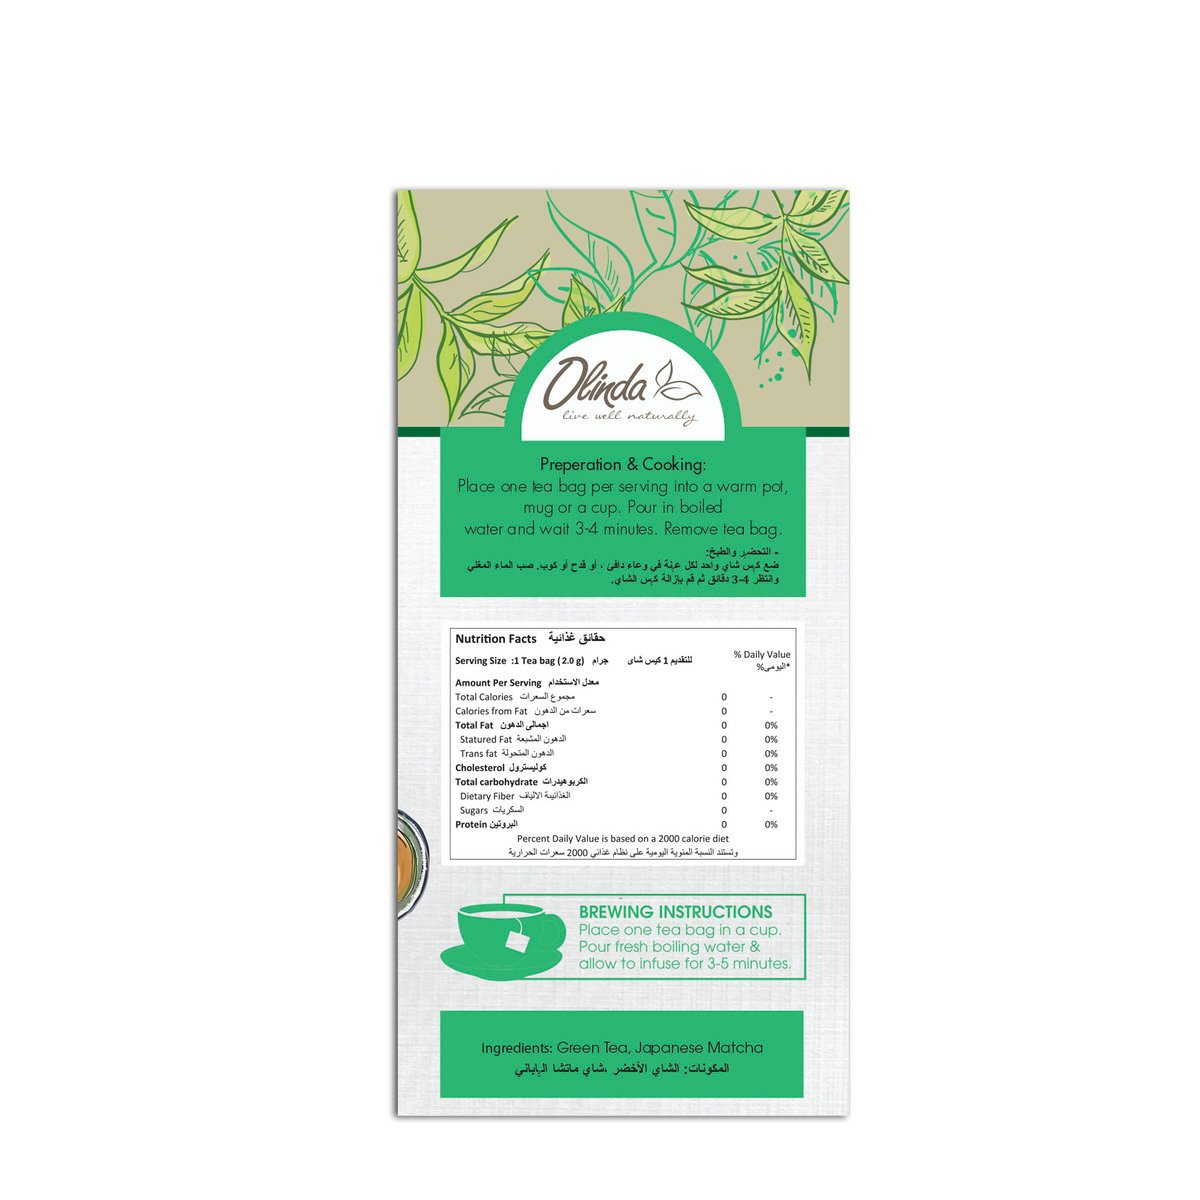 Olinda Matcha Green Tea Infusion Tea 25pcs